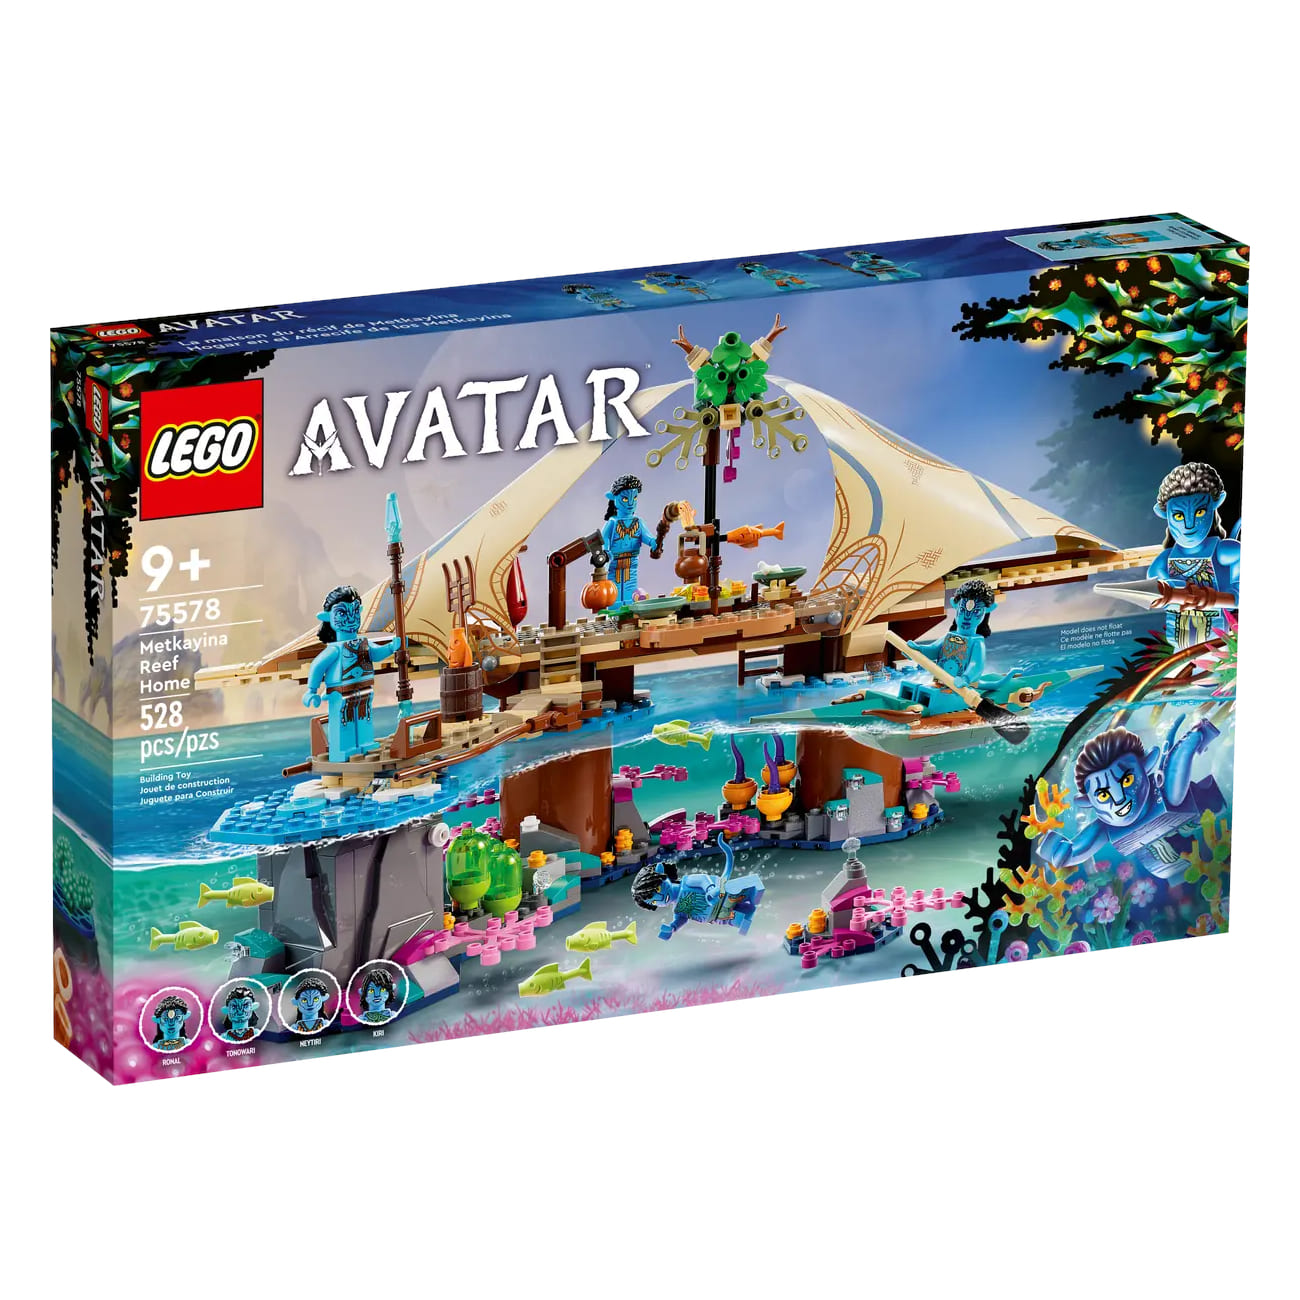 Конструктор LEGO Avatar Metkayina Reef Home 75578, 528 деталей